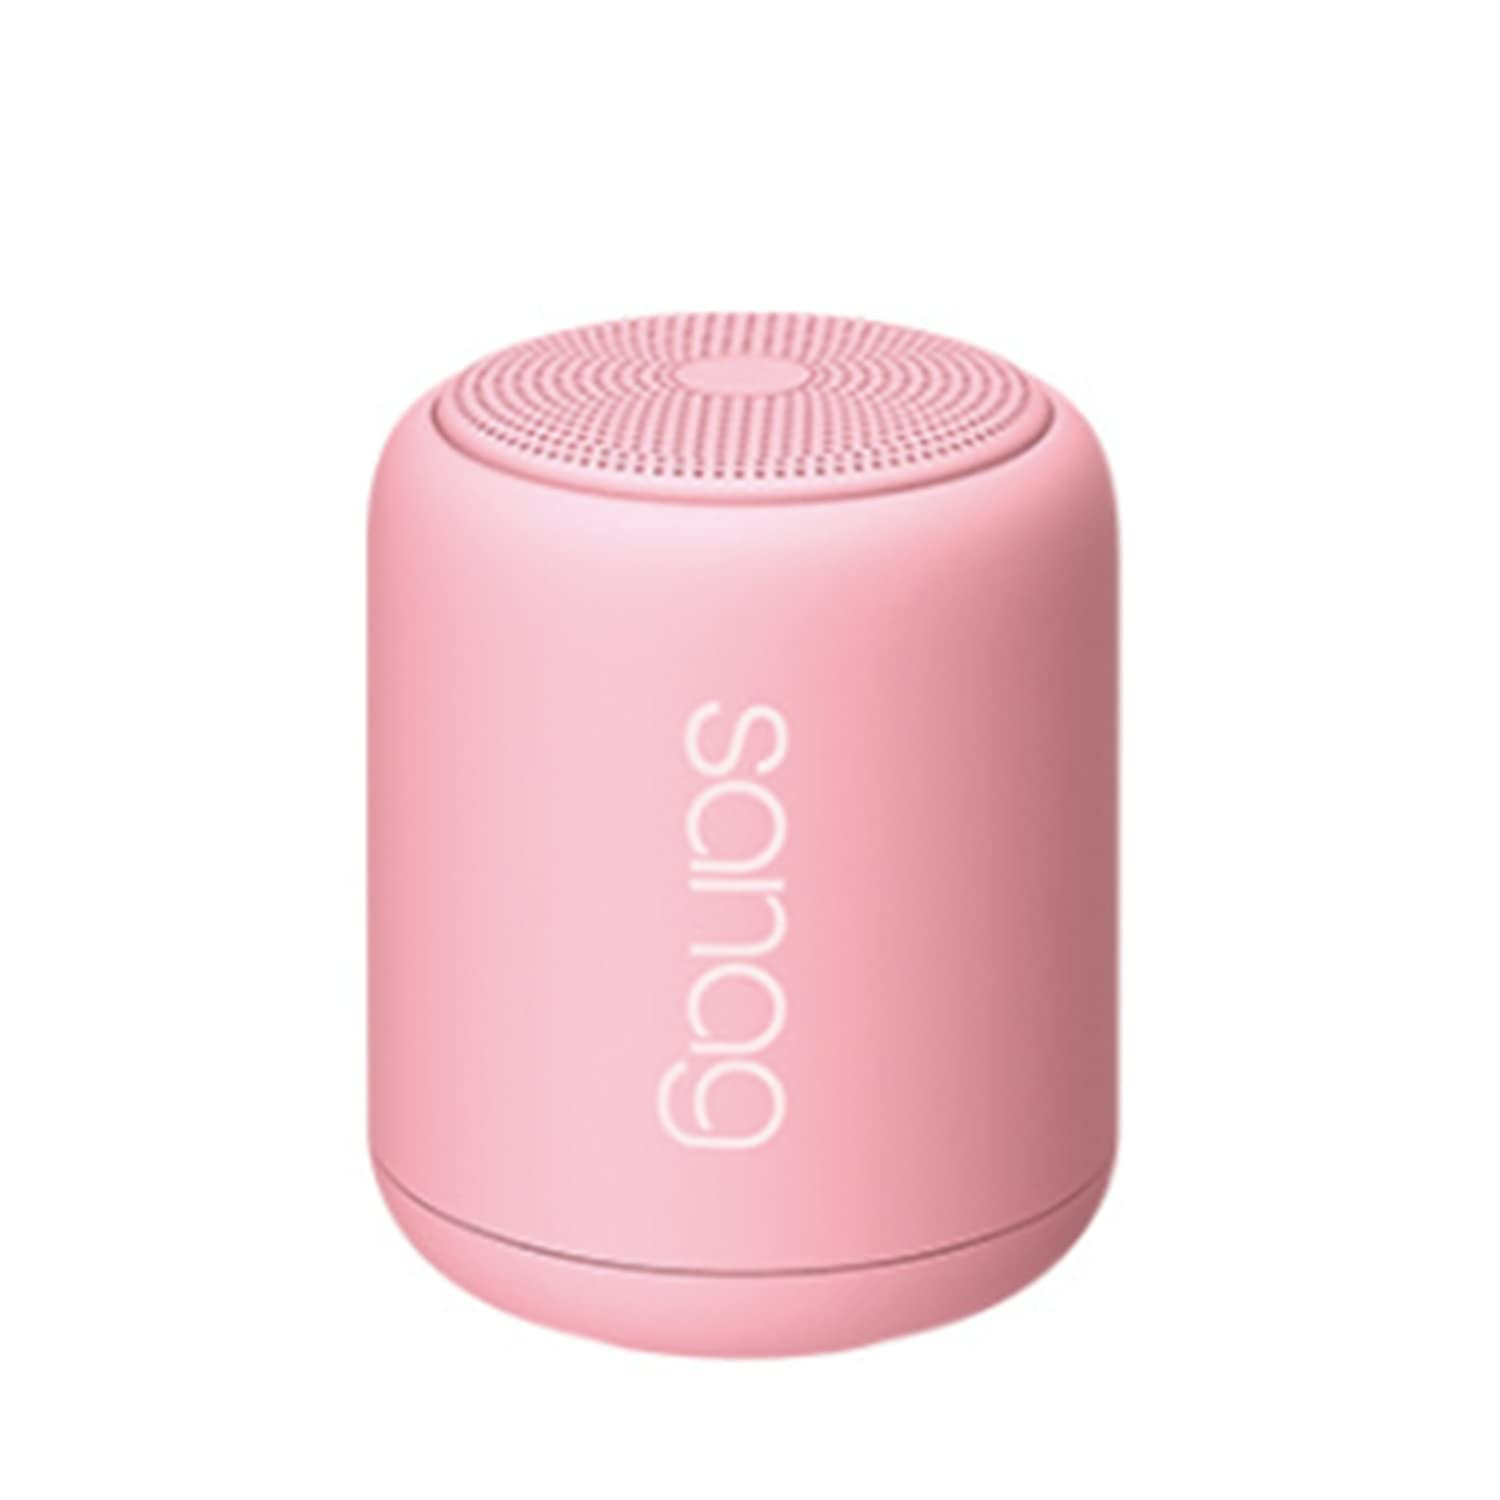 Sanag X6S Portable Bluetooth Speaker- Pink Color